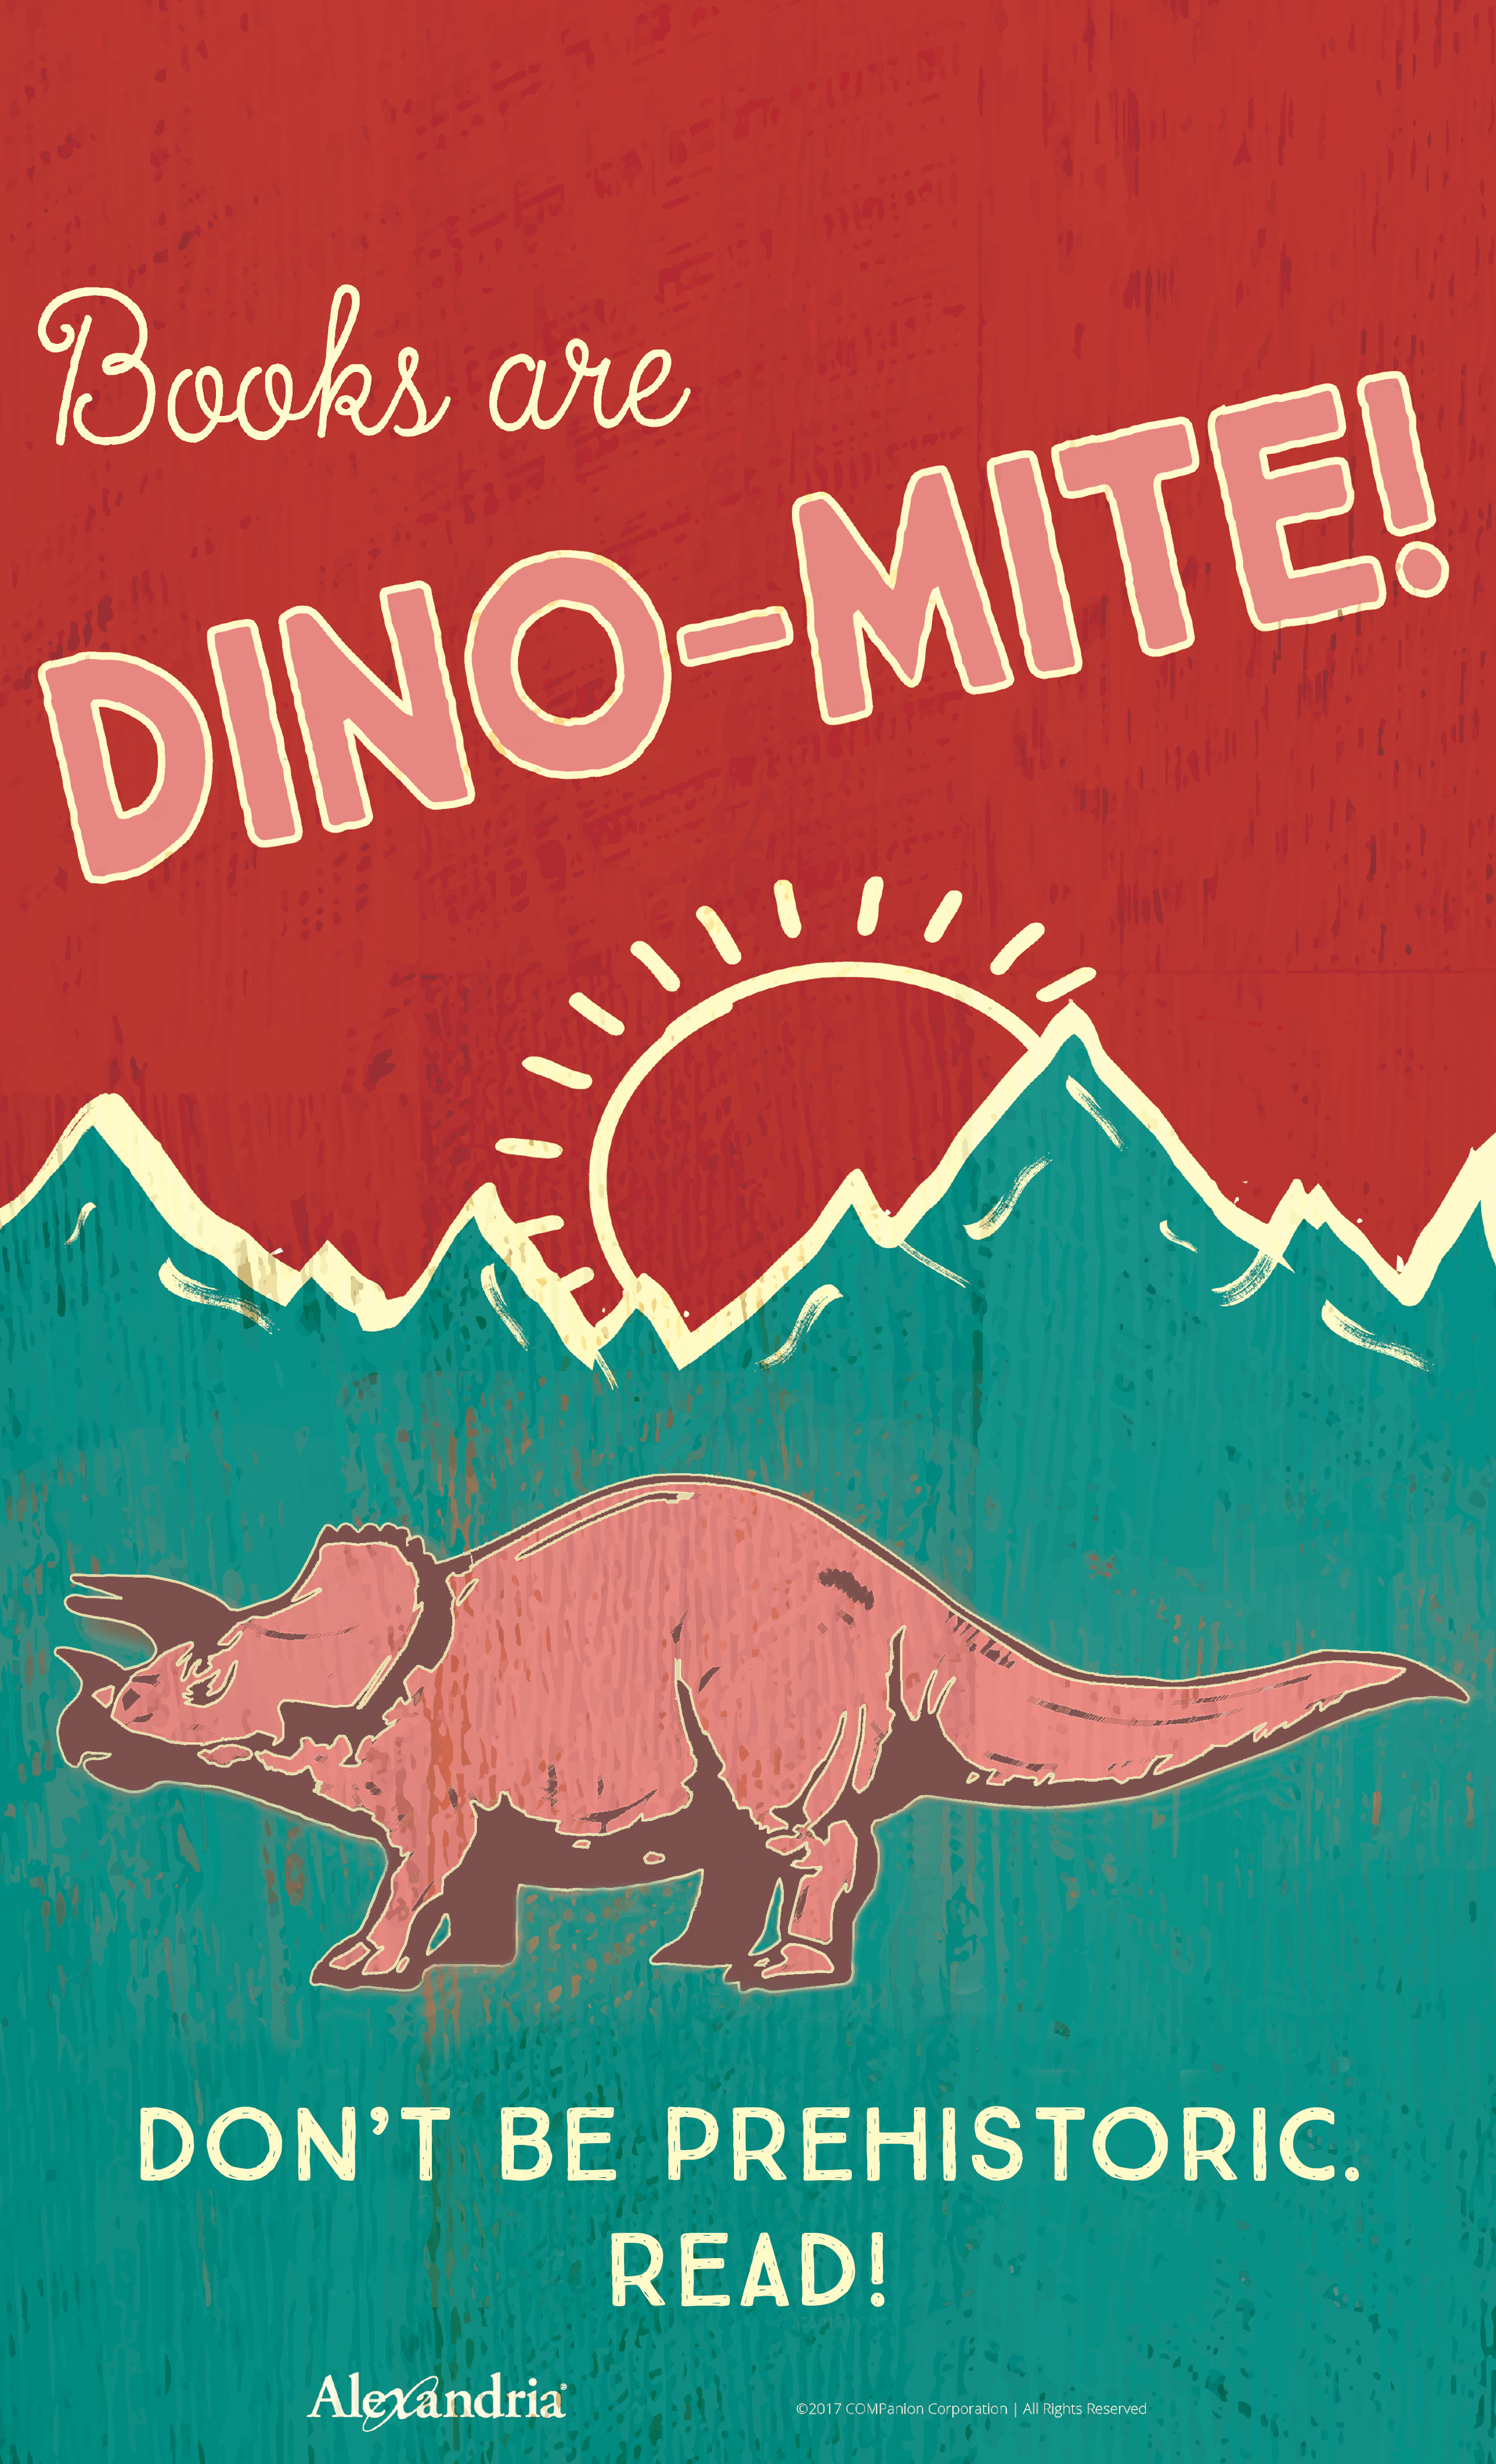 Dinosaur posters